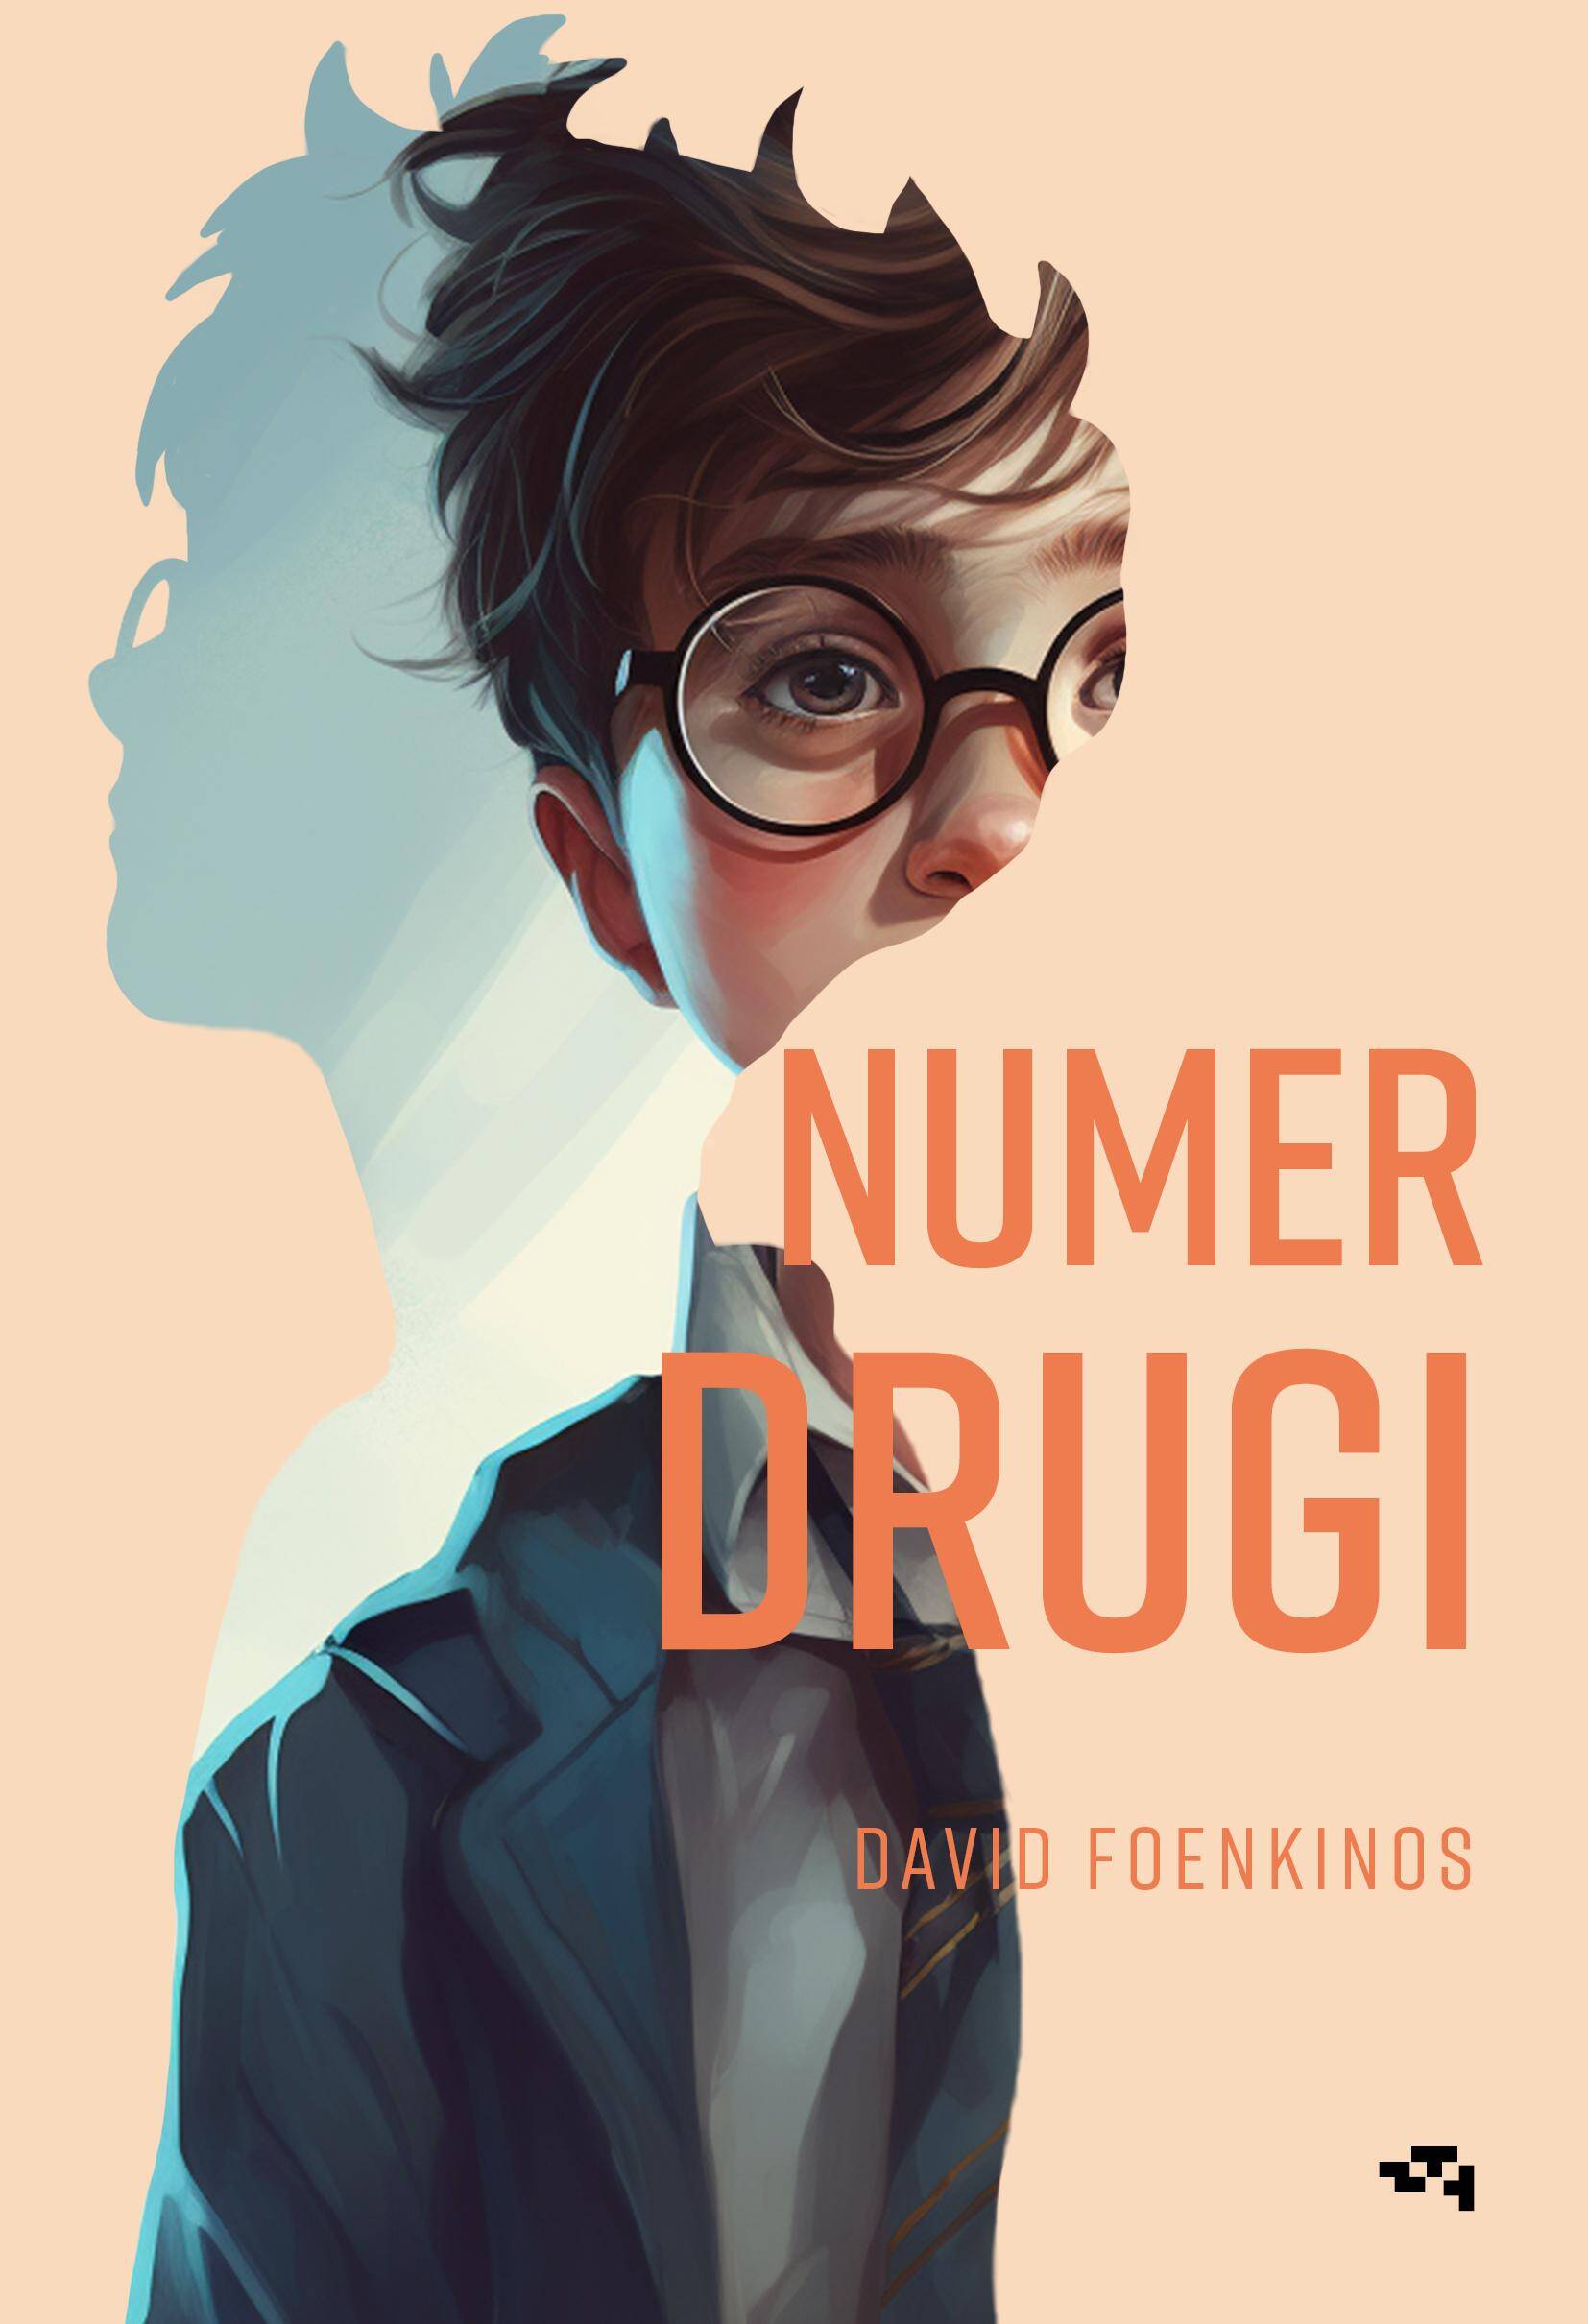 Numer drugi/David Foenkinos